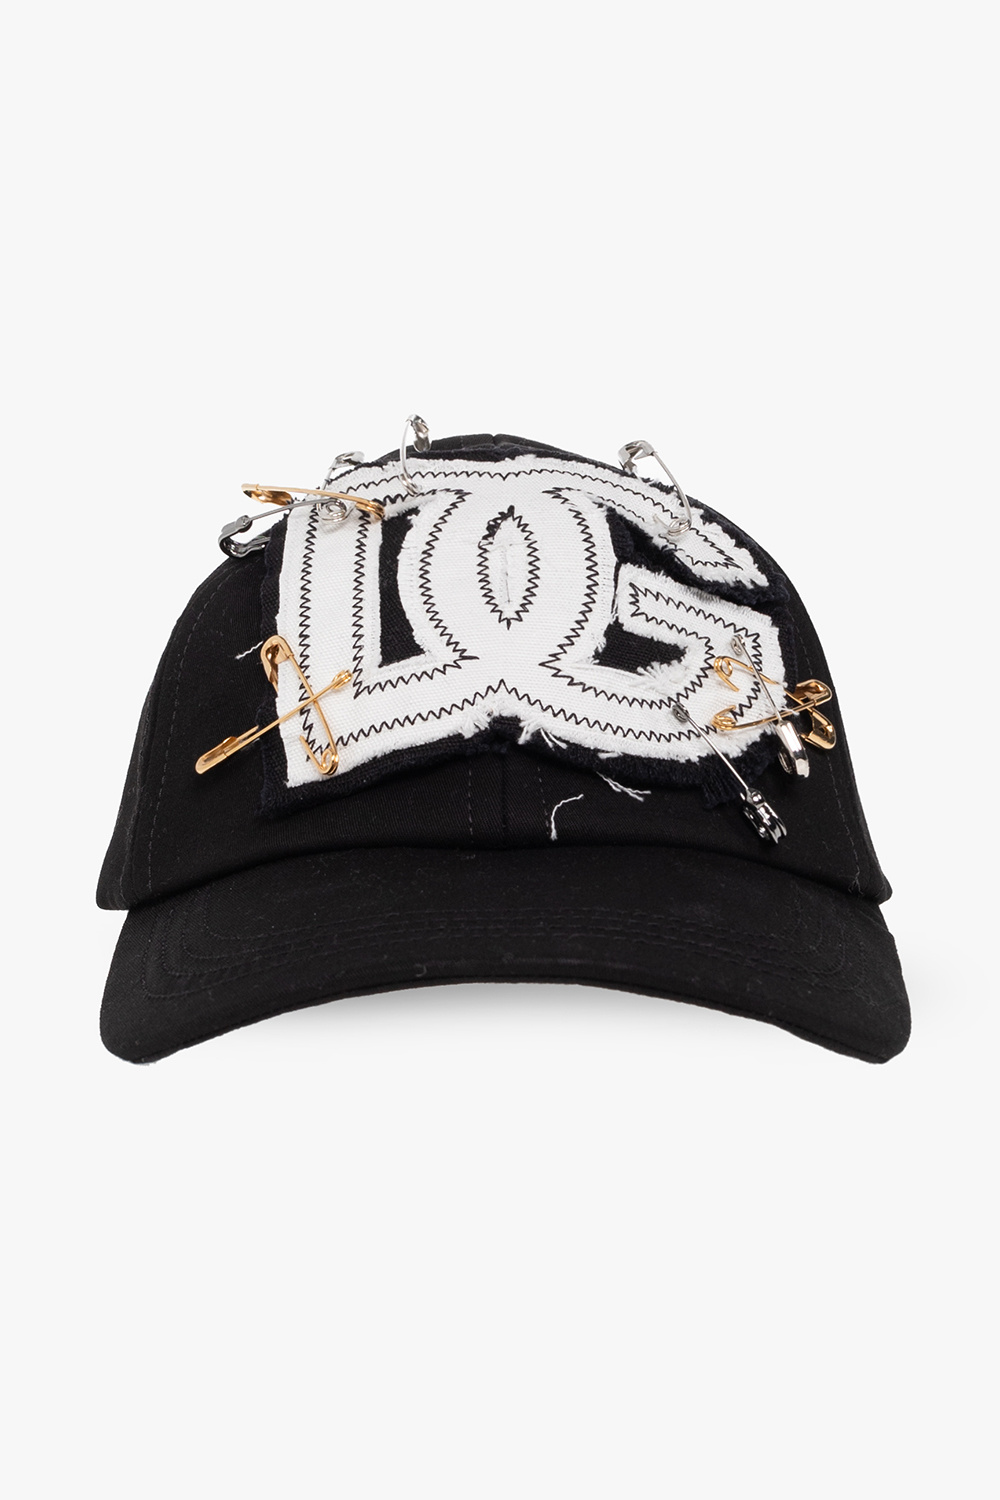 Dolce & Gabbana Baseball cap | Dolce & Gabbana logo-embroidered balconette  bra Braun | Men\'s Accessories | StclaircomoShops